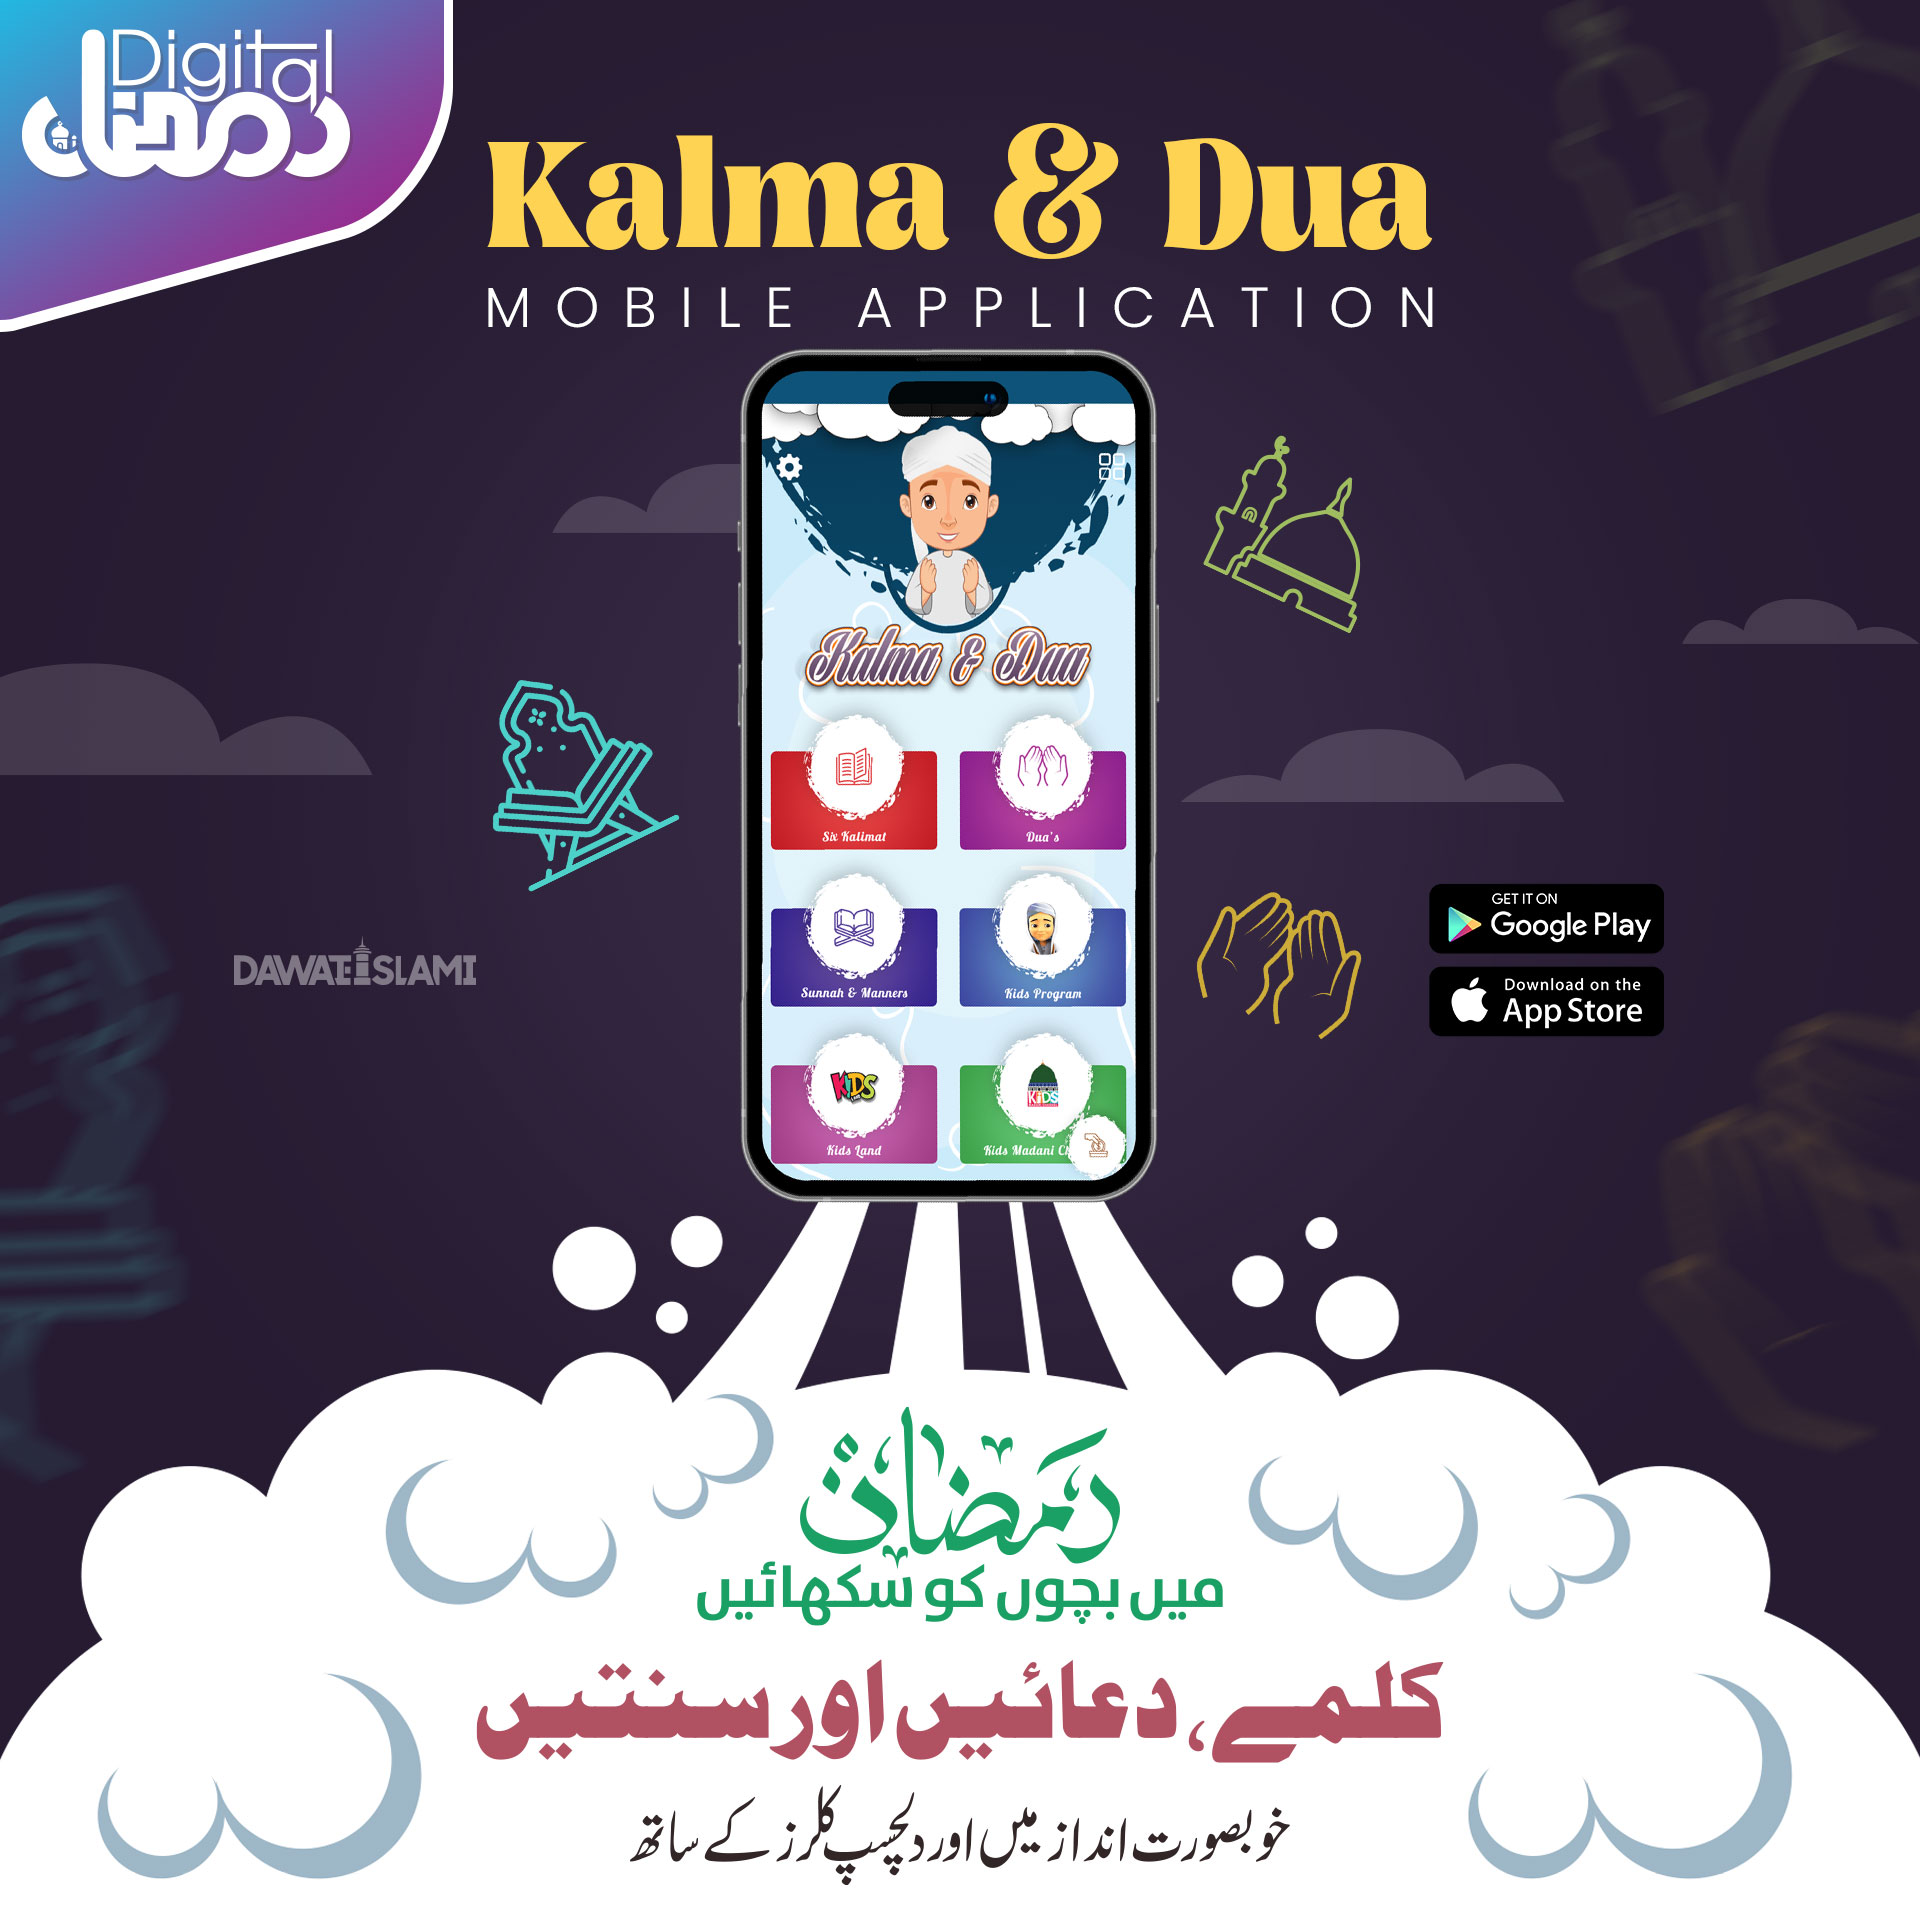 Kalma Aur Dua Mobile Application